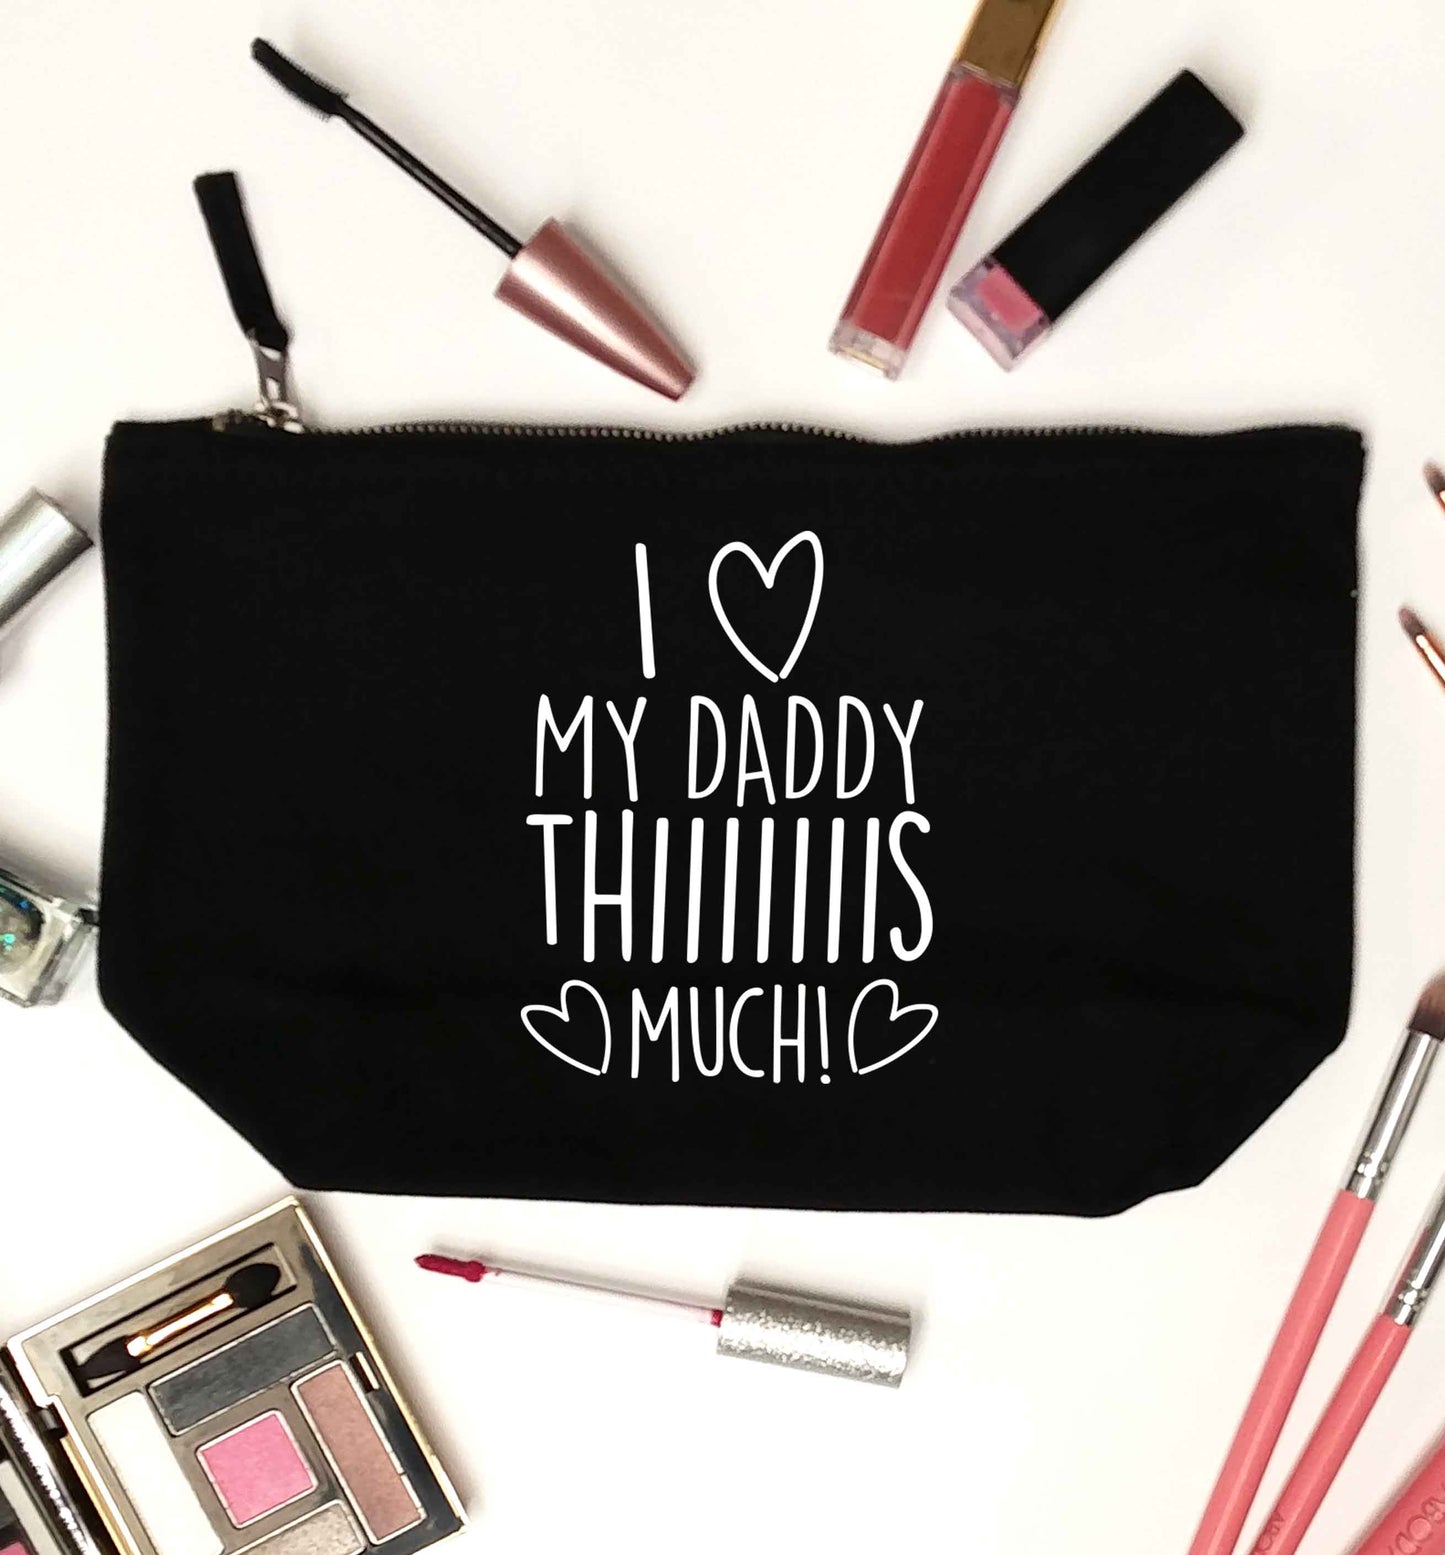 I love my daddy thiiiiis much! black makeup bag